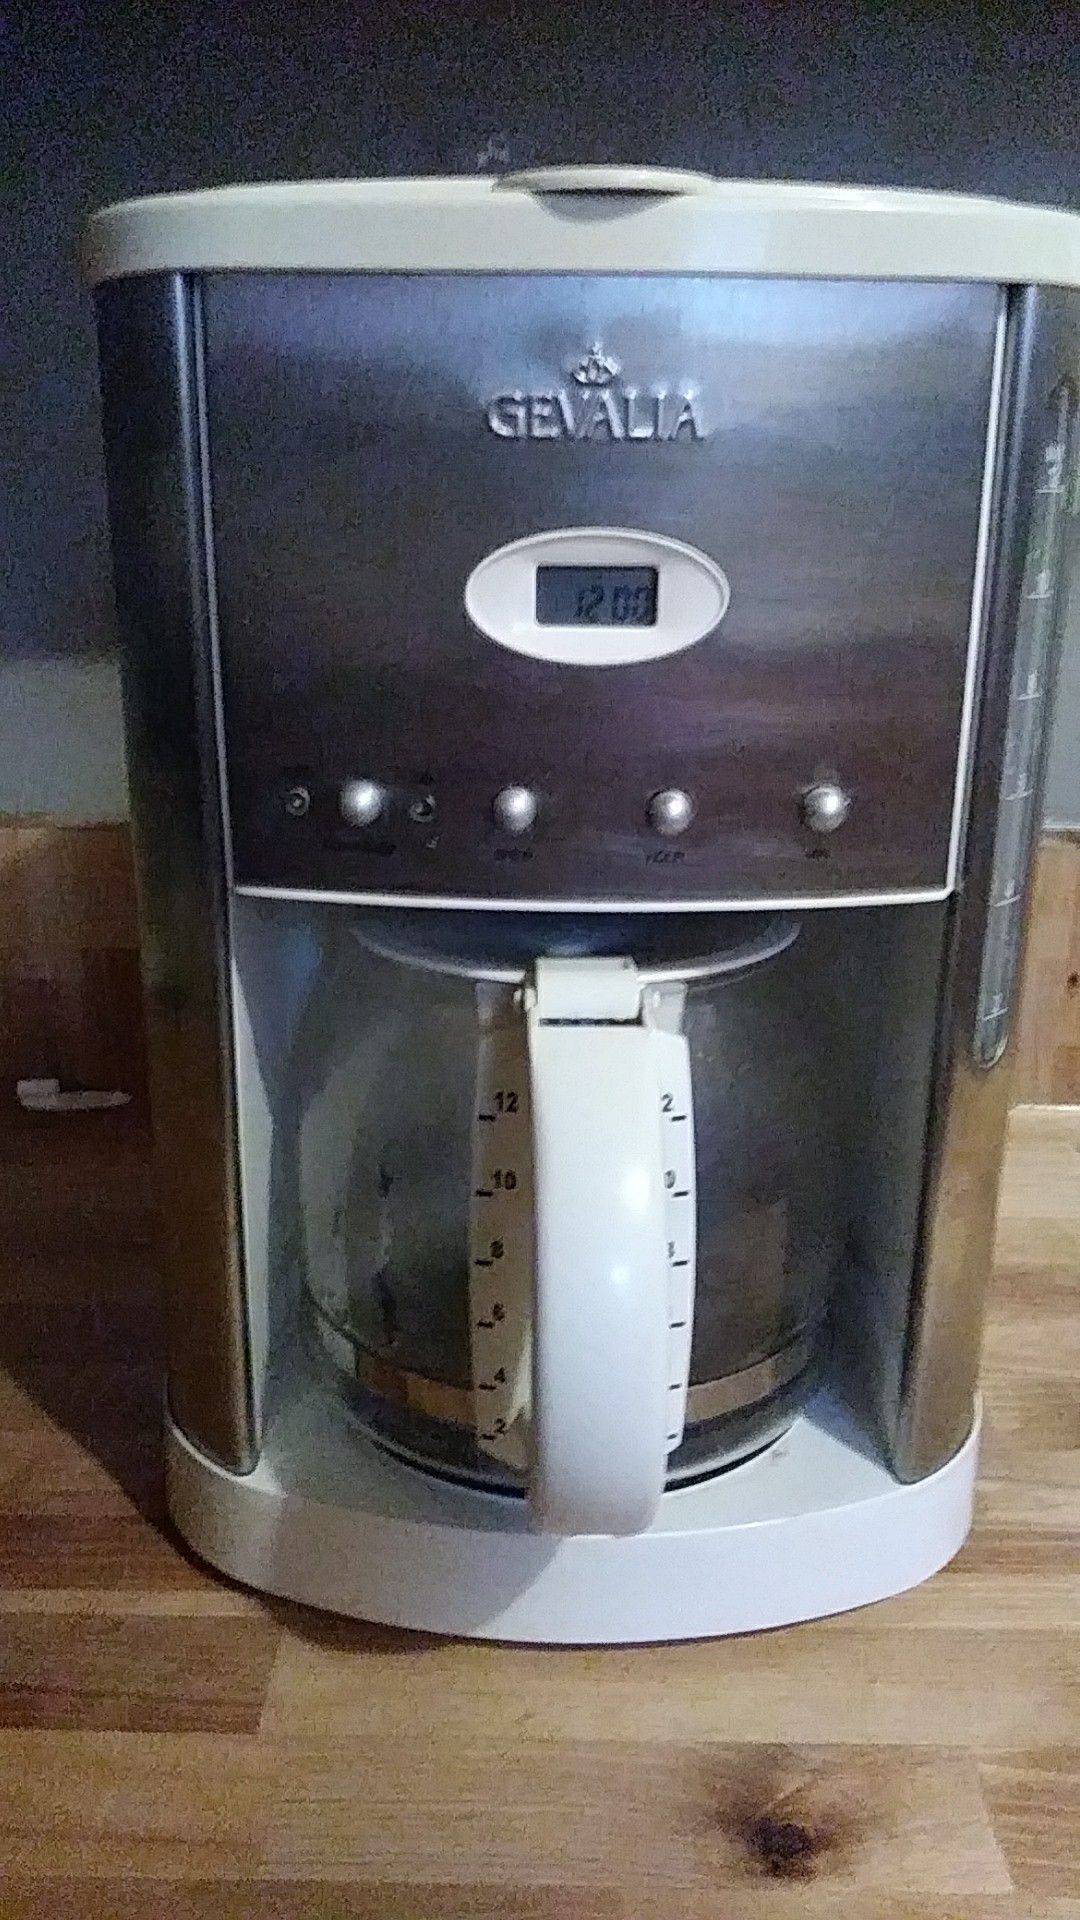 Gevalia coffee maker 12-cup